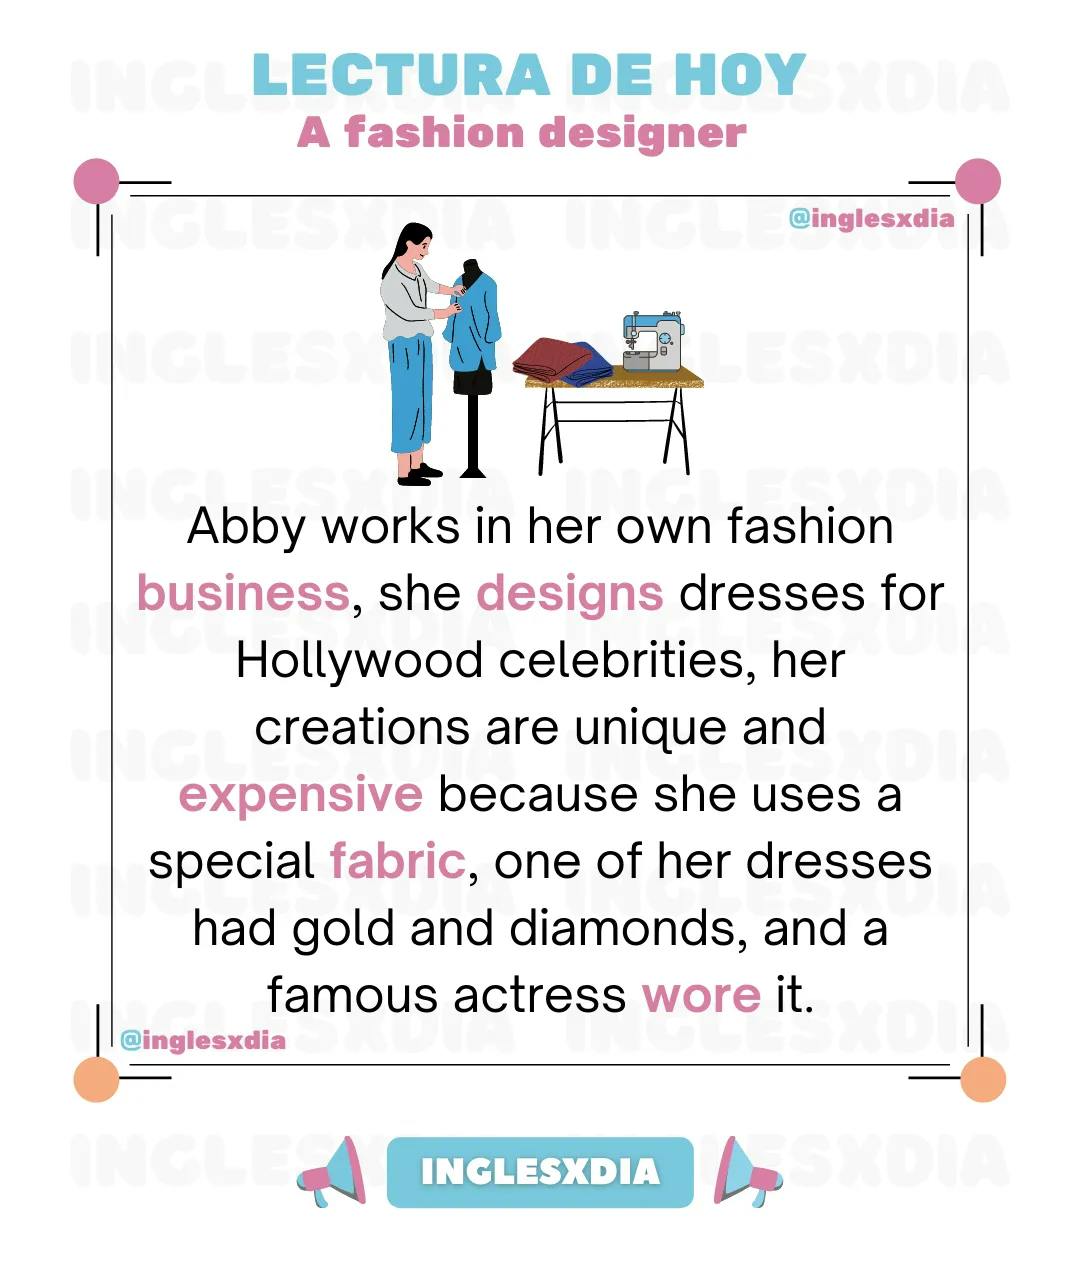 A fashion designer